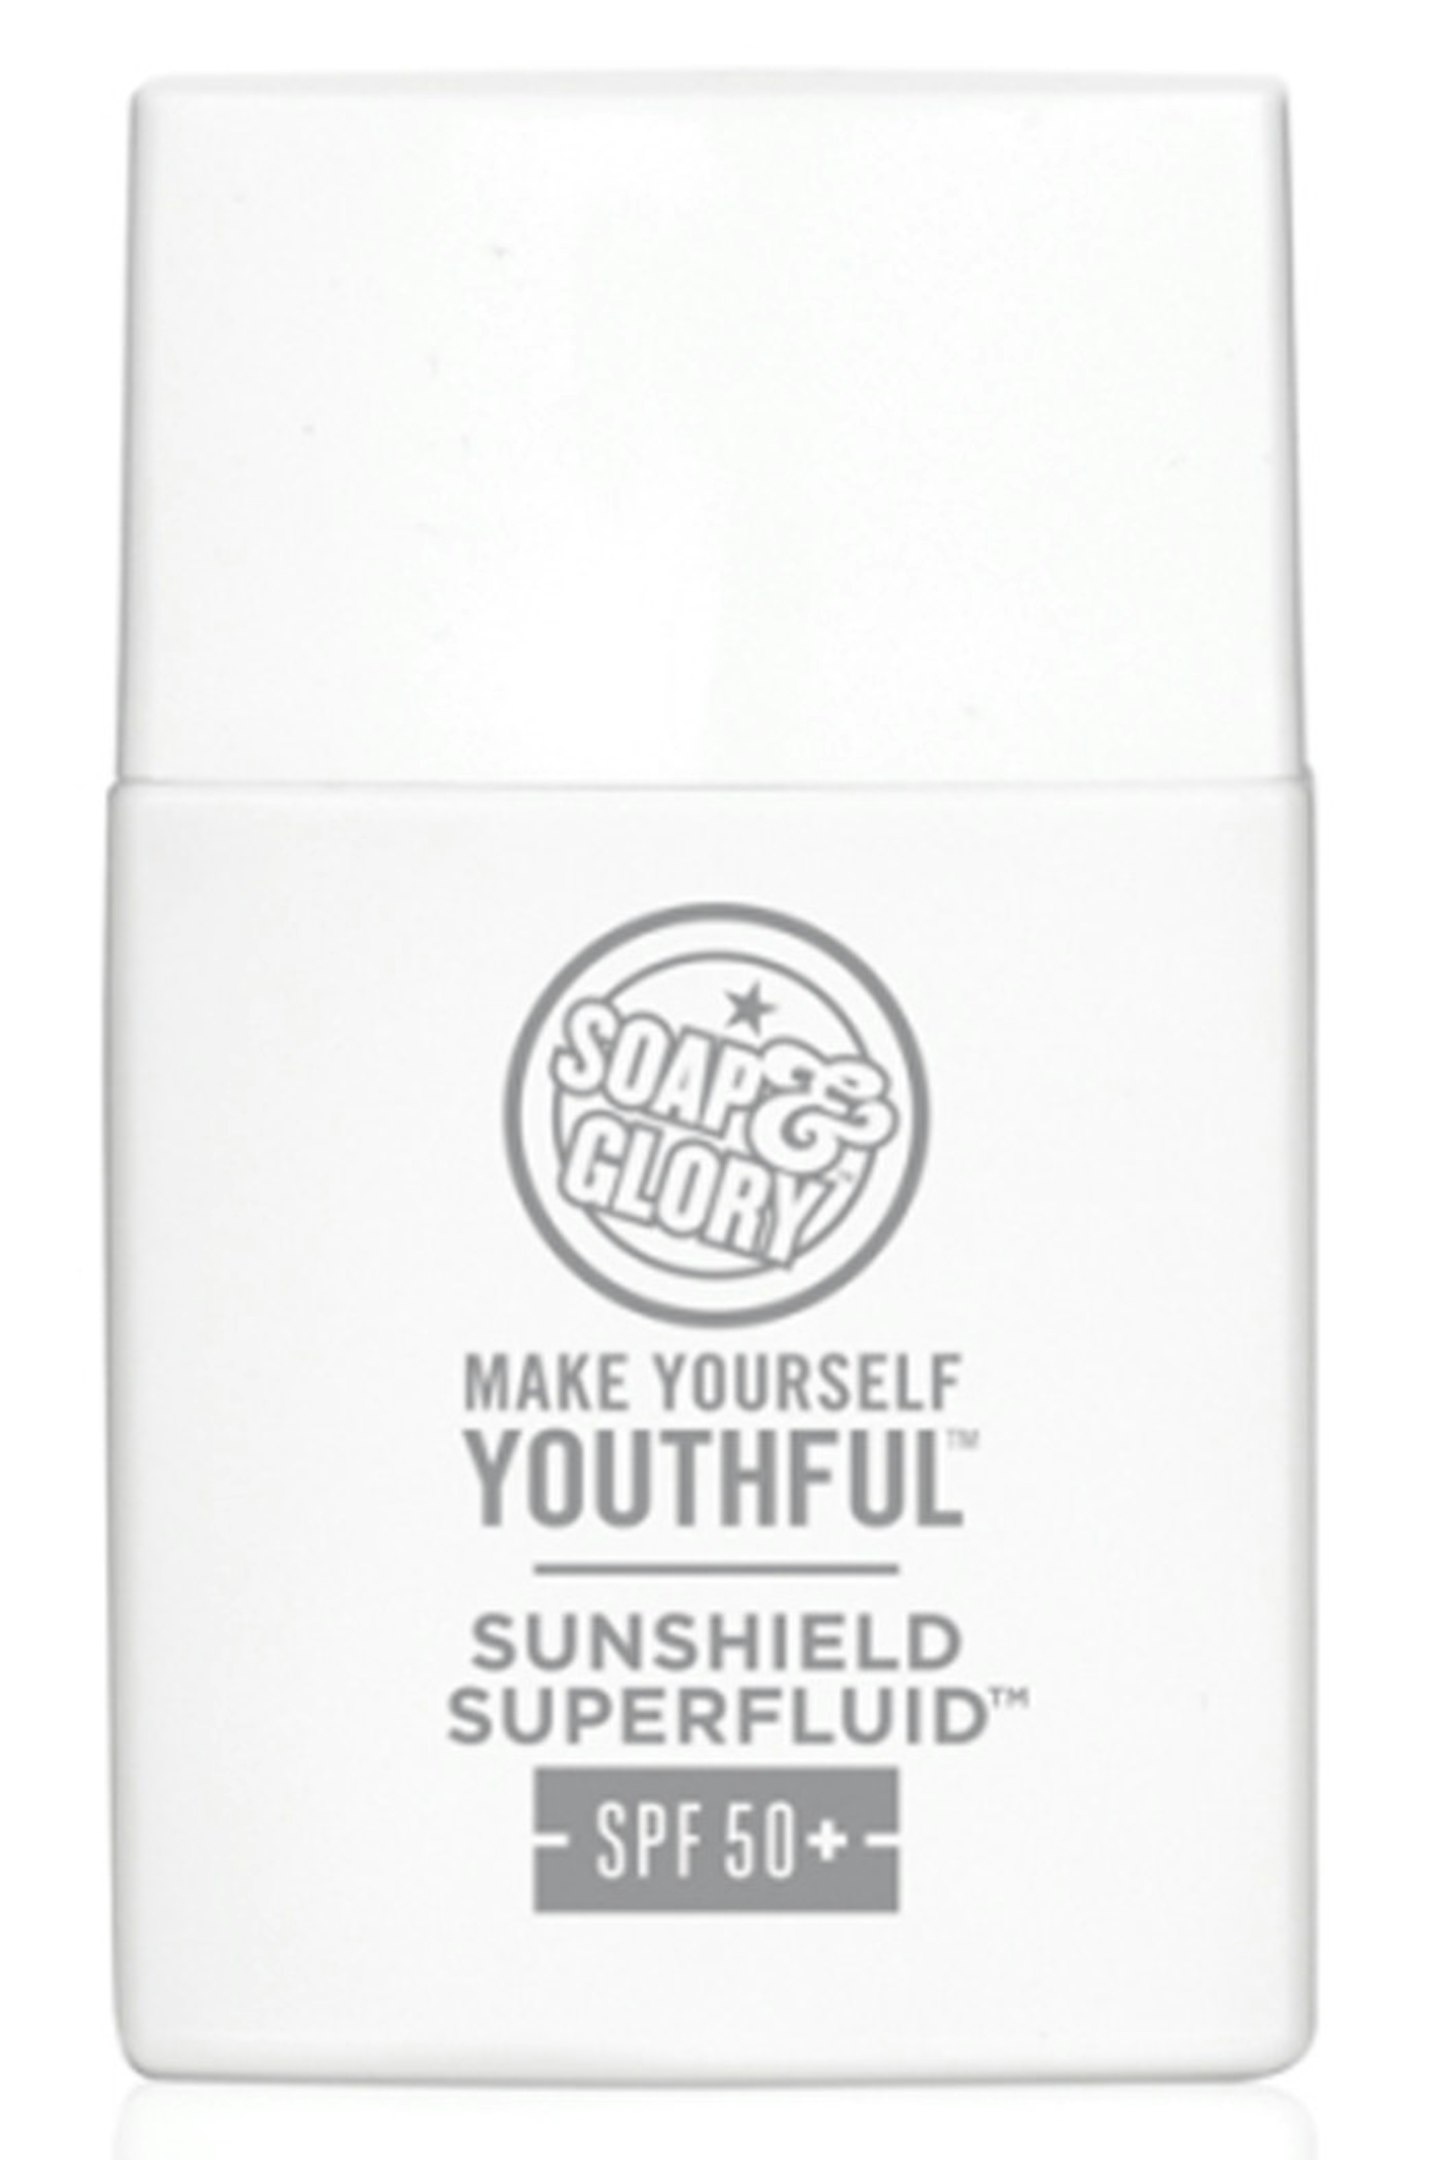 Soap & Glory Make Yourself Youthful Sunshield Superfluid SPF50, £15.00